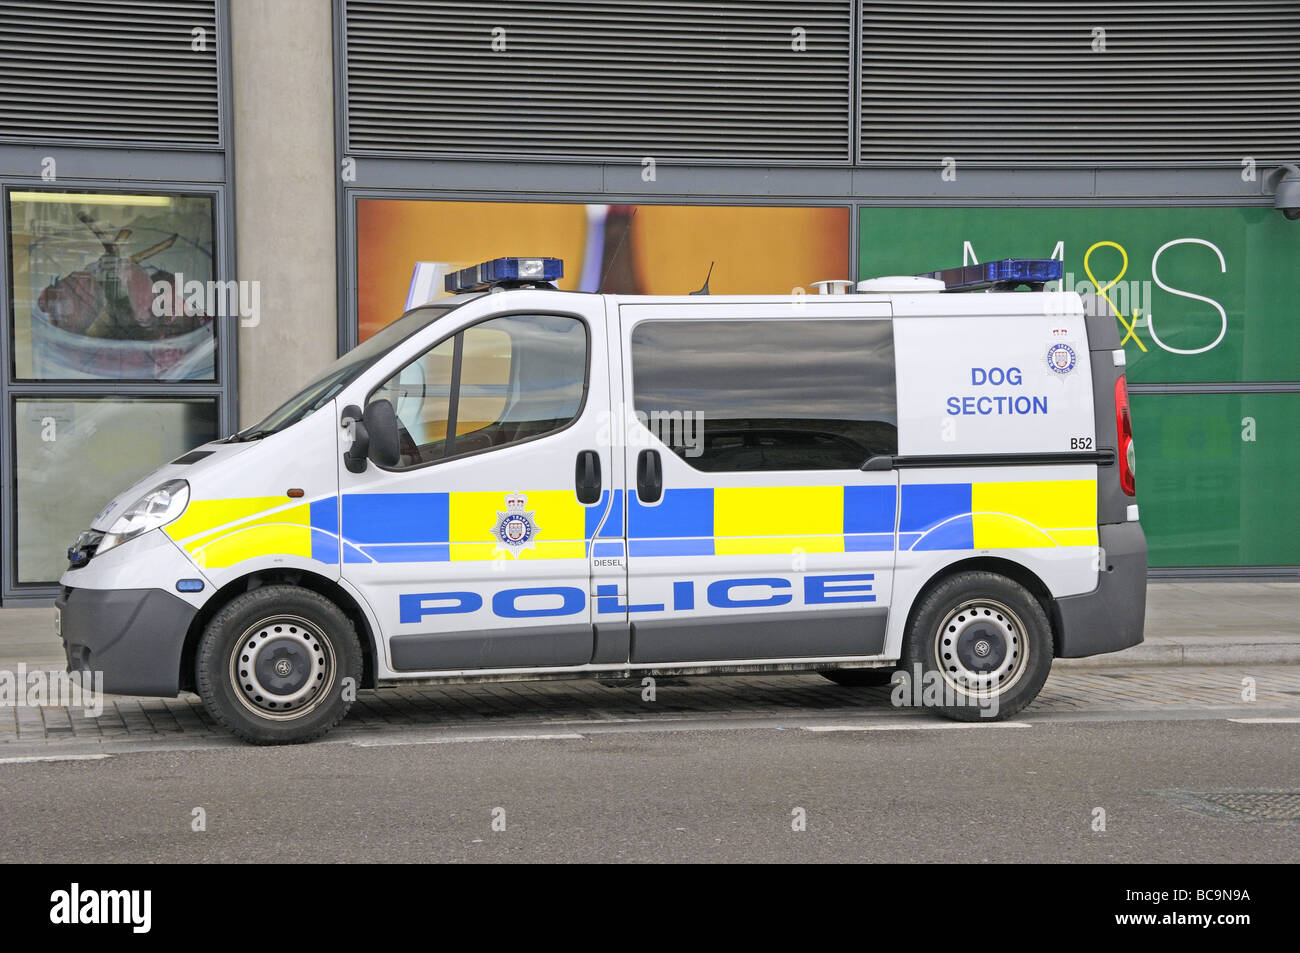 Police Van Dog Section London England UK Stock Photo